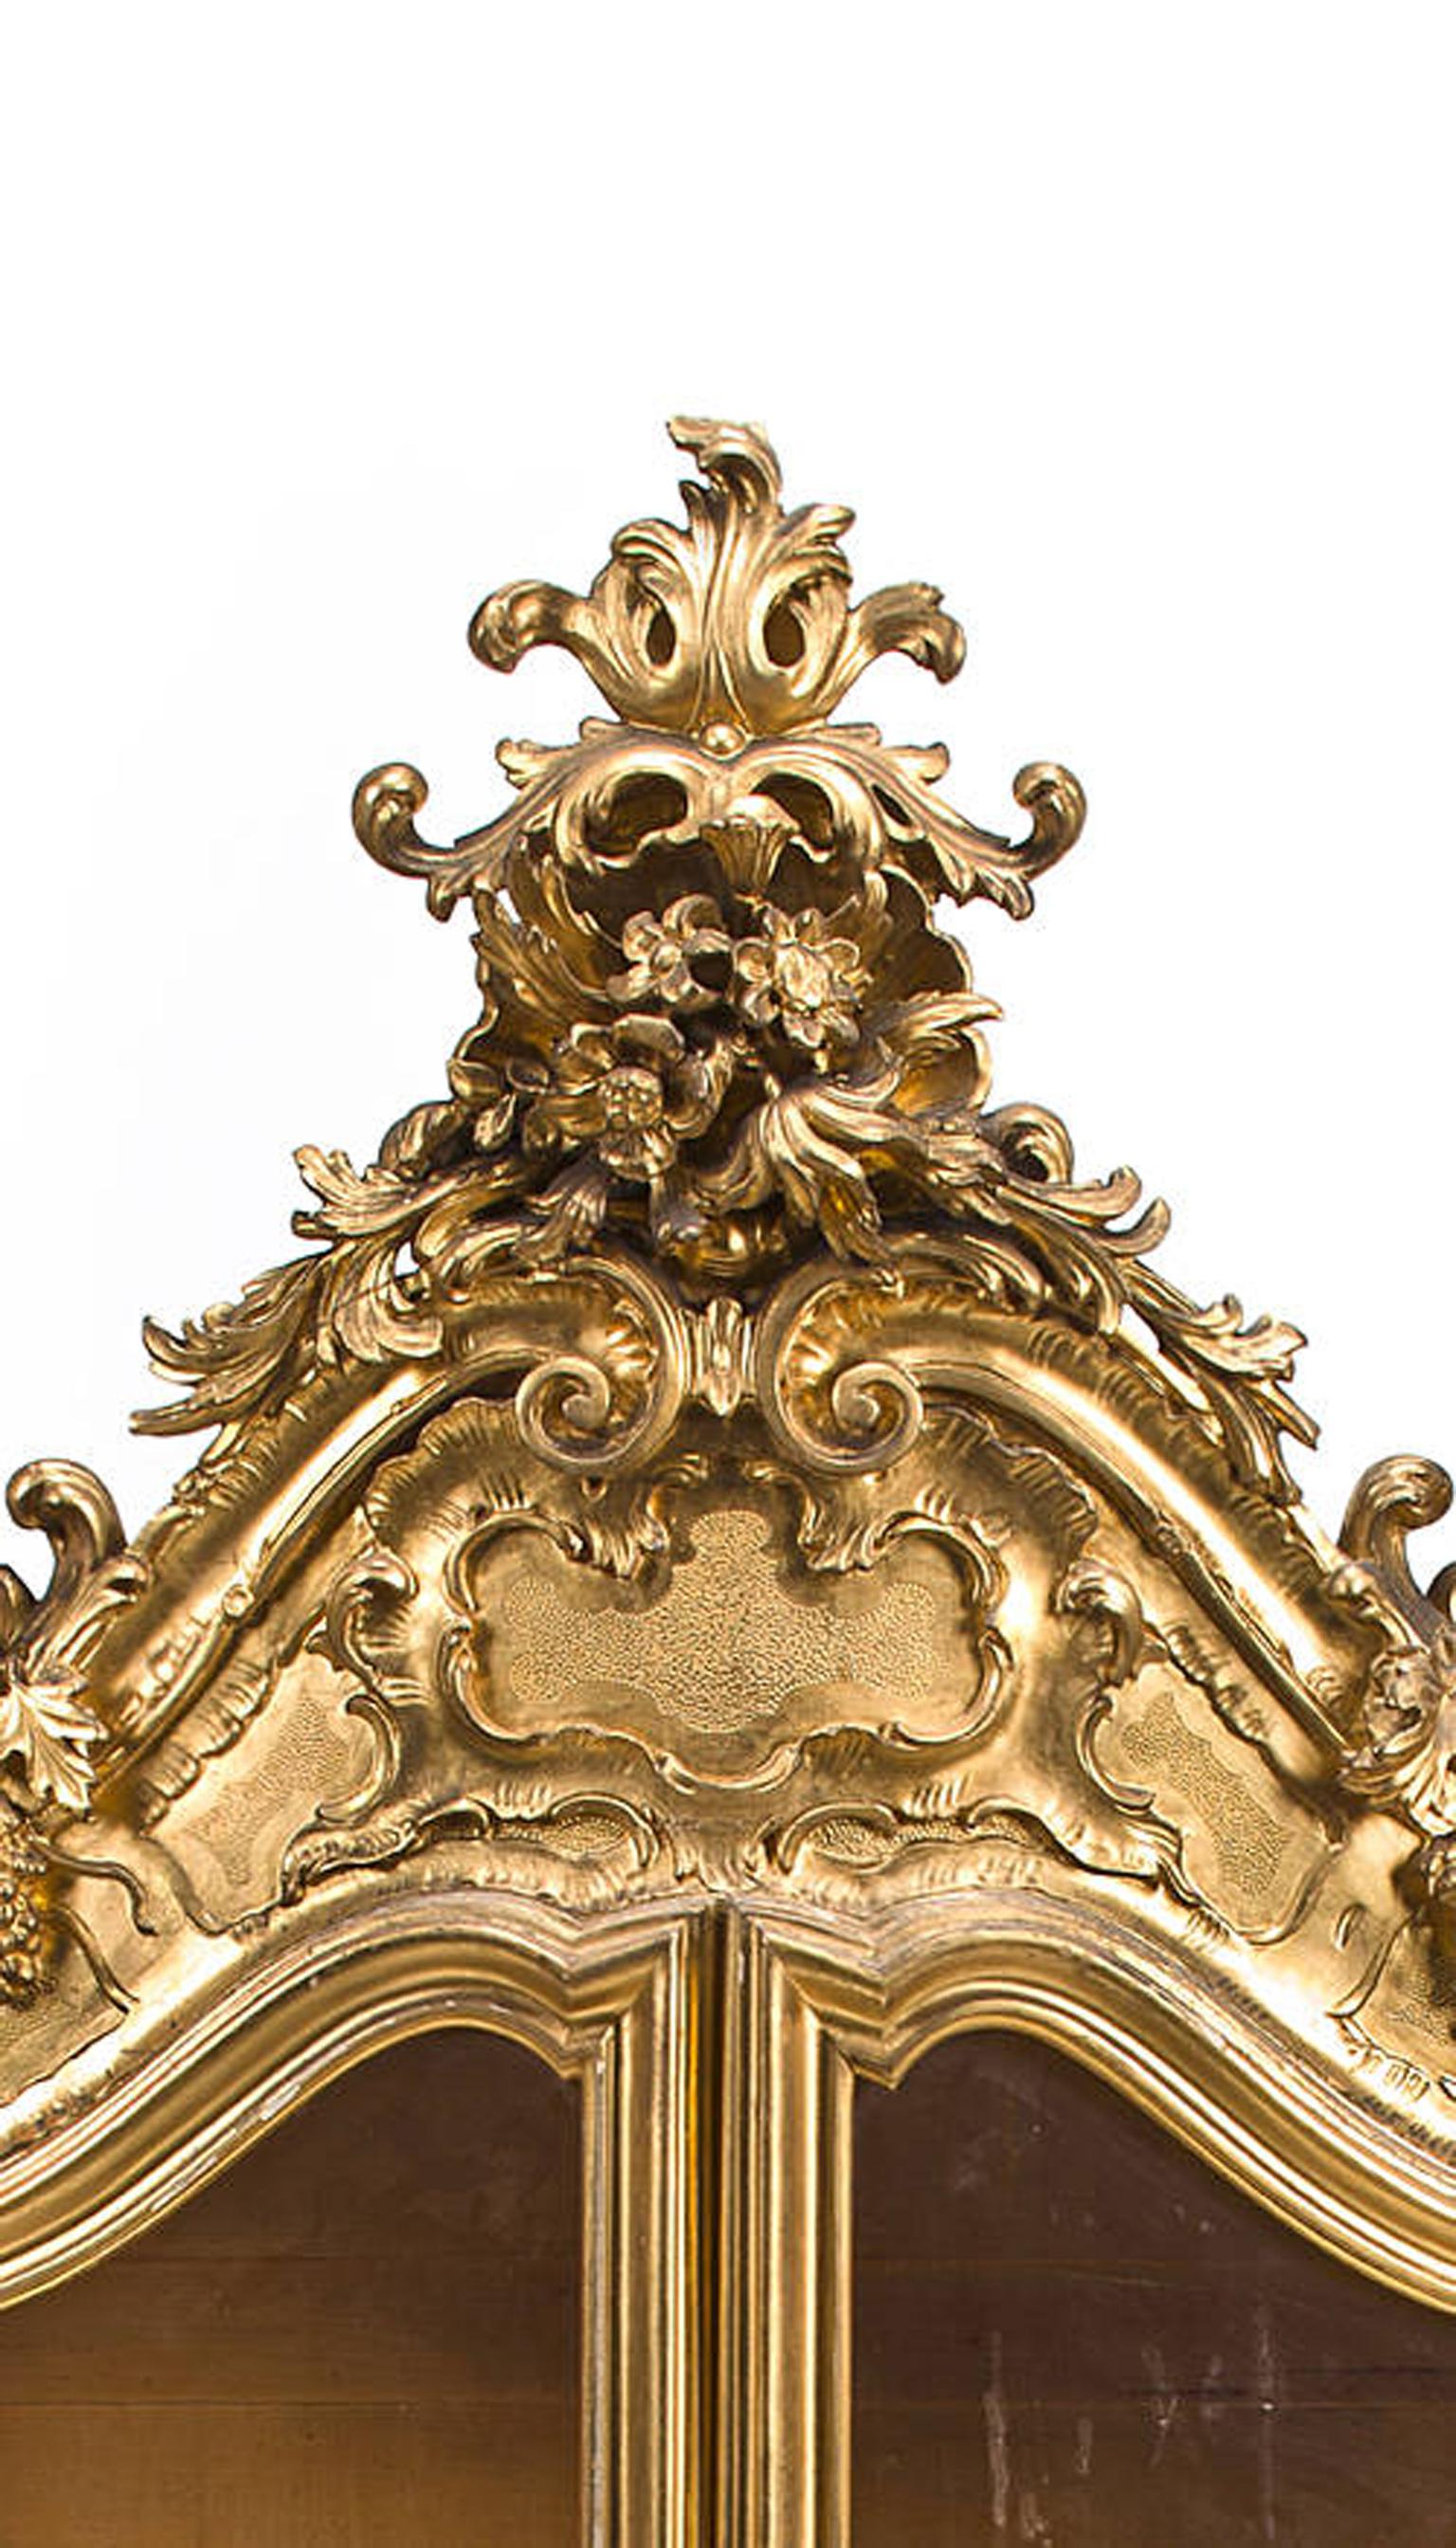 Hand-Carved Italian Rococo Style Giltwood Vitrine Cabinet, 19th Century